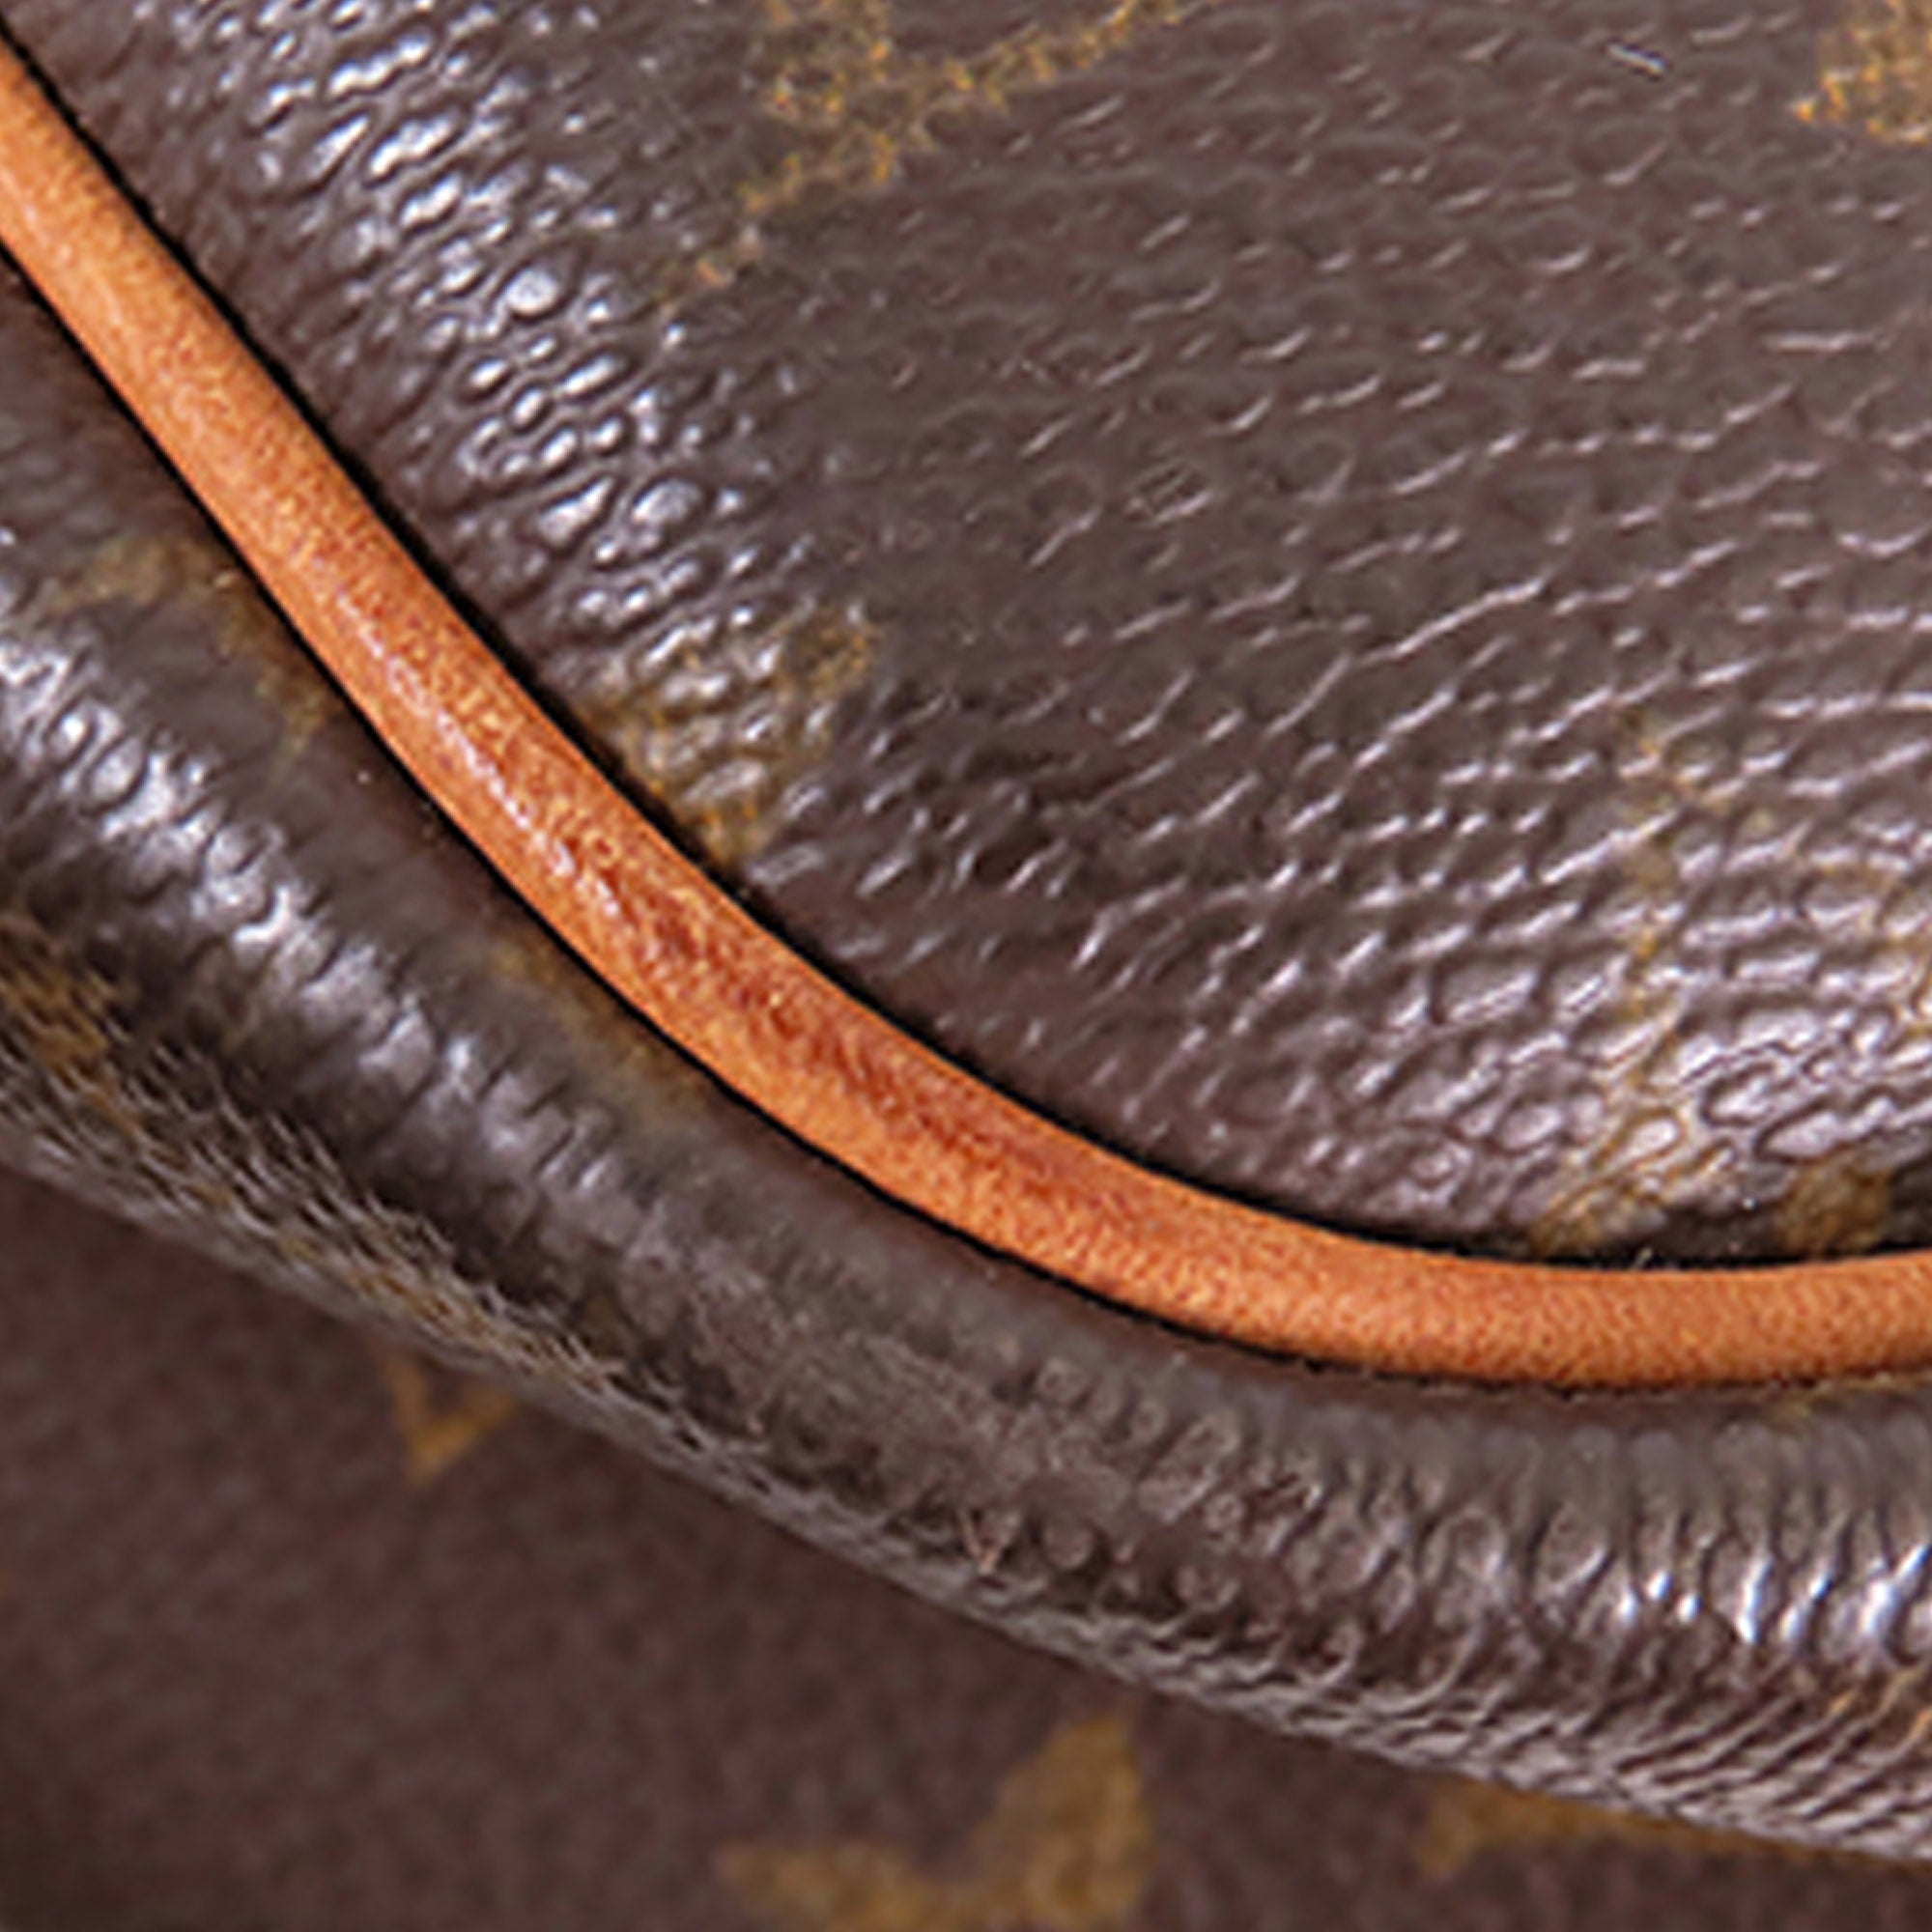 Reporter GM Monogram (PL006) – Keeks Designer Handbags